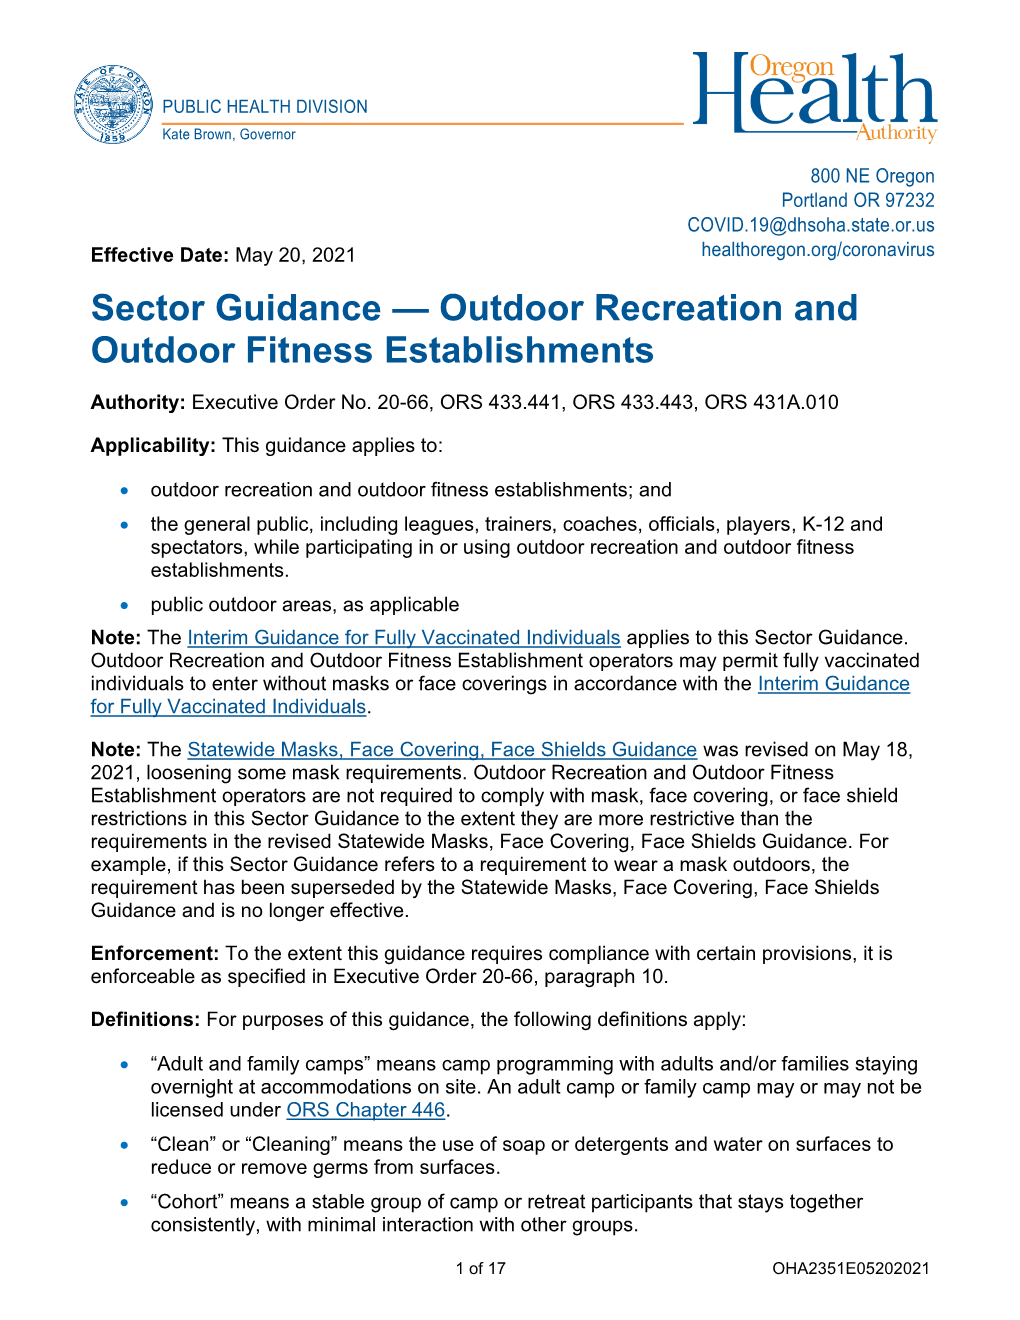 Outdoor Recreation and Outdoor Fitness Establishments